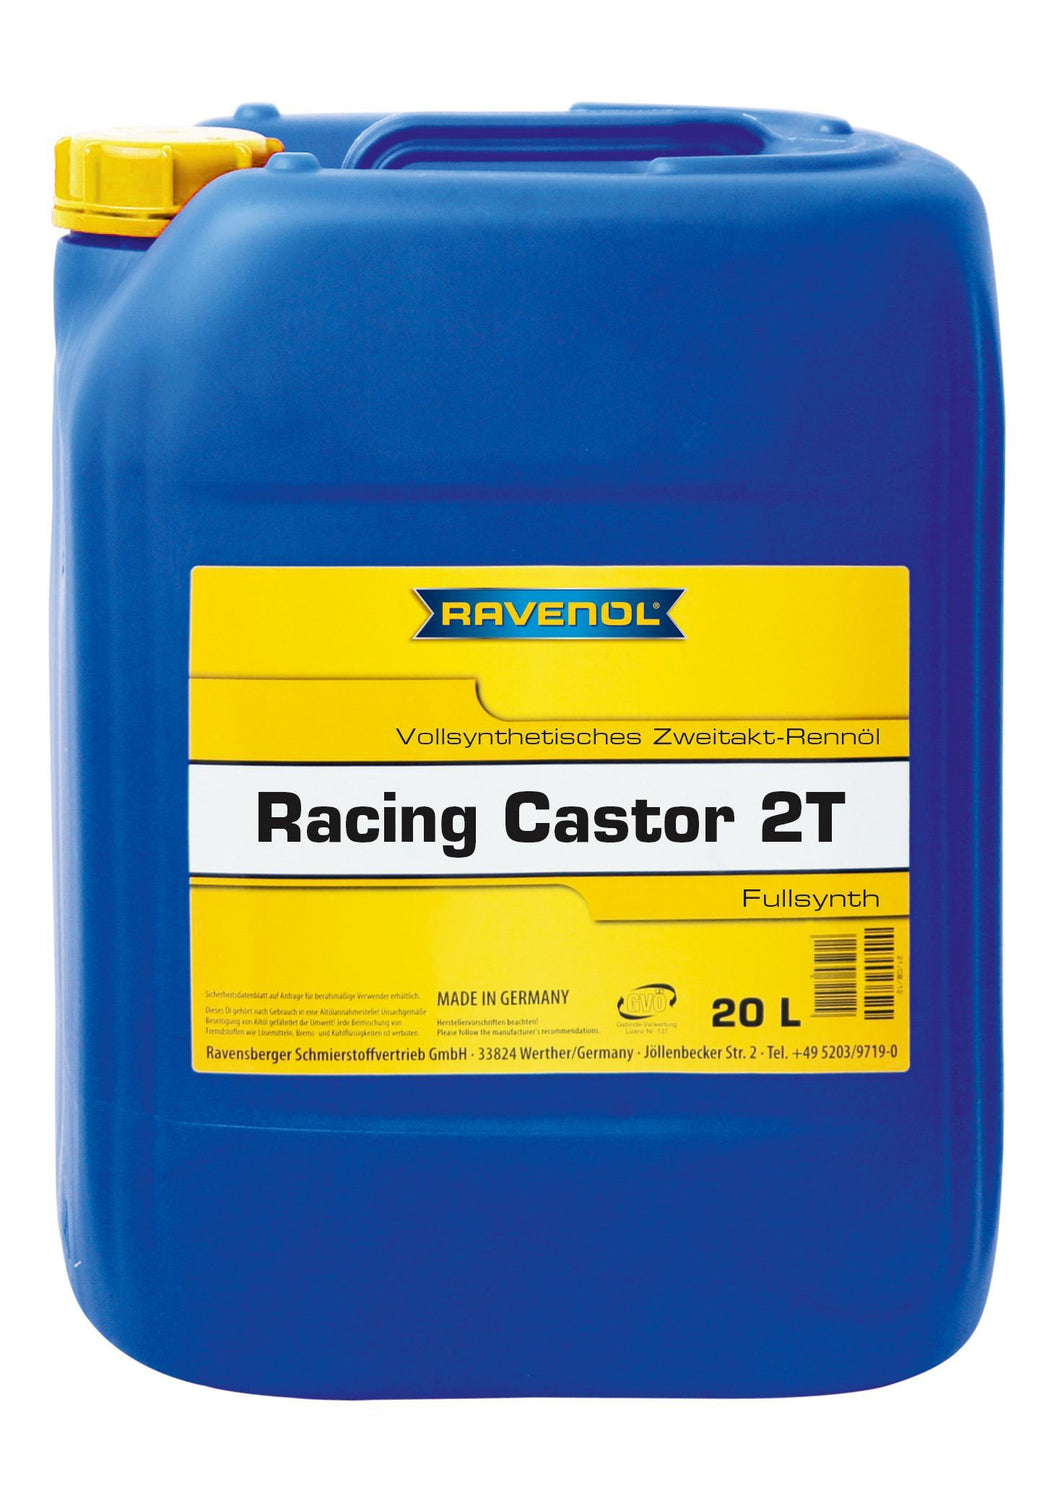 RAVENOL racing castor 2T ricino - 20 litri